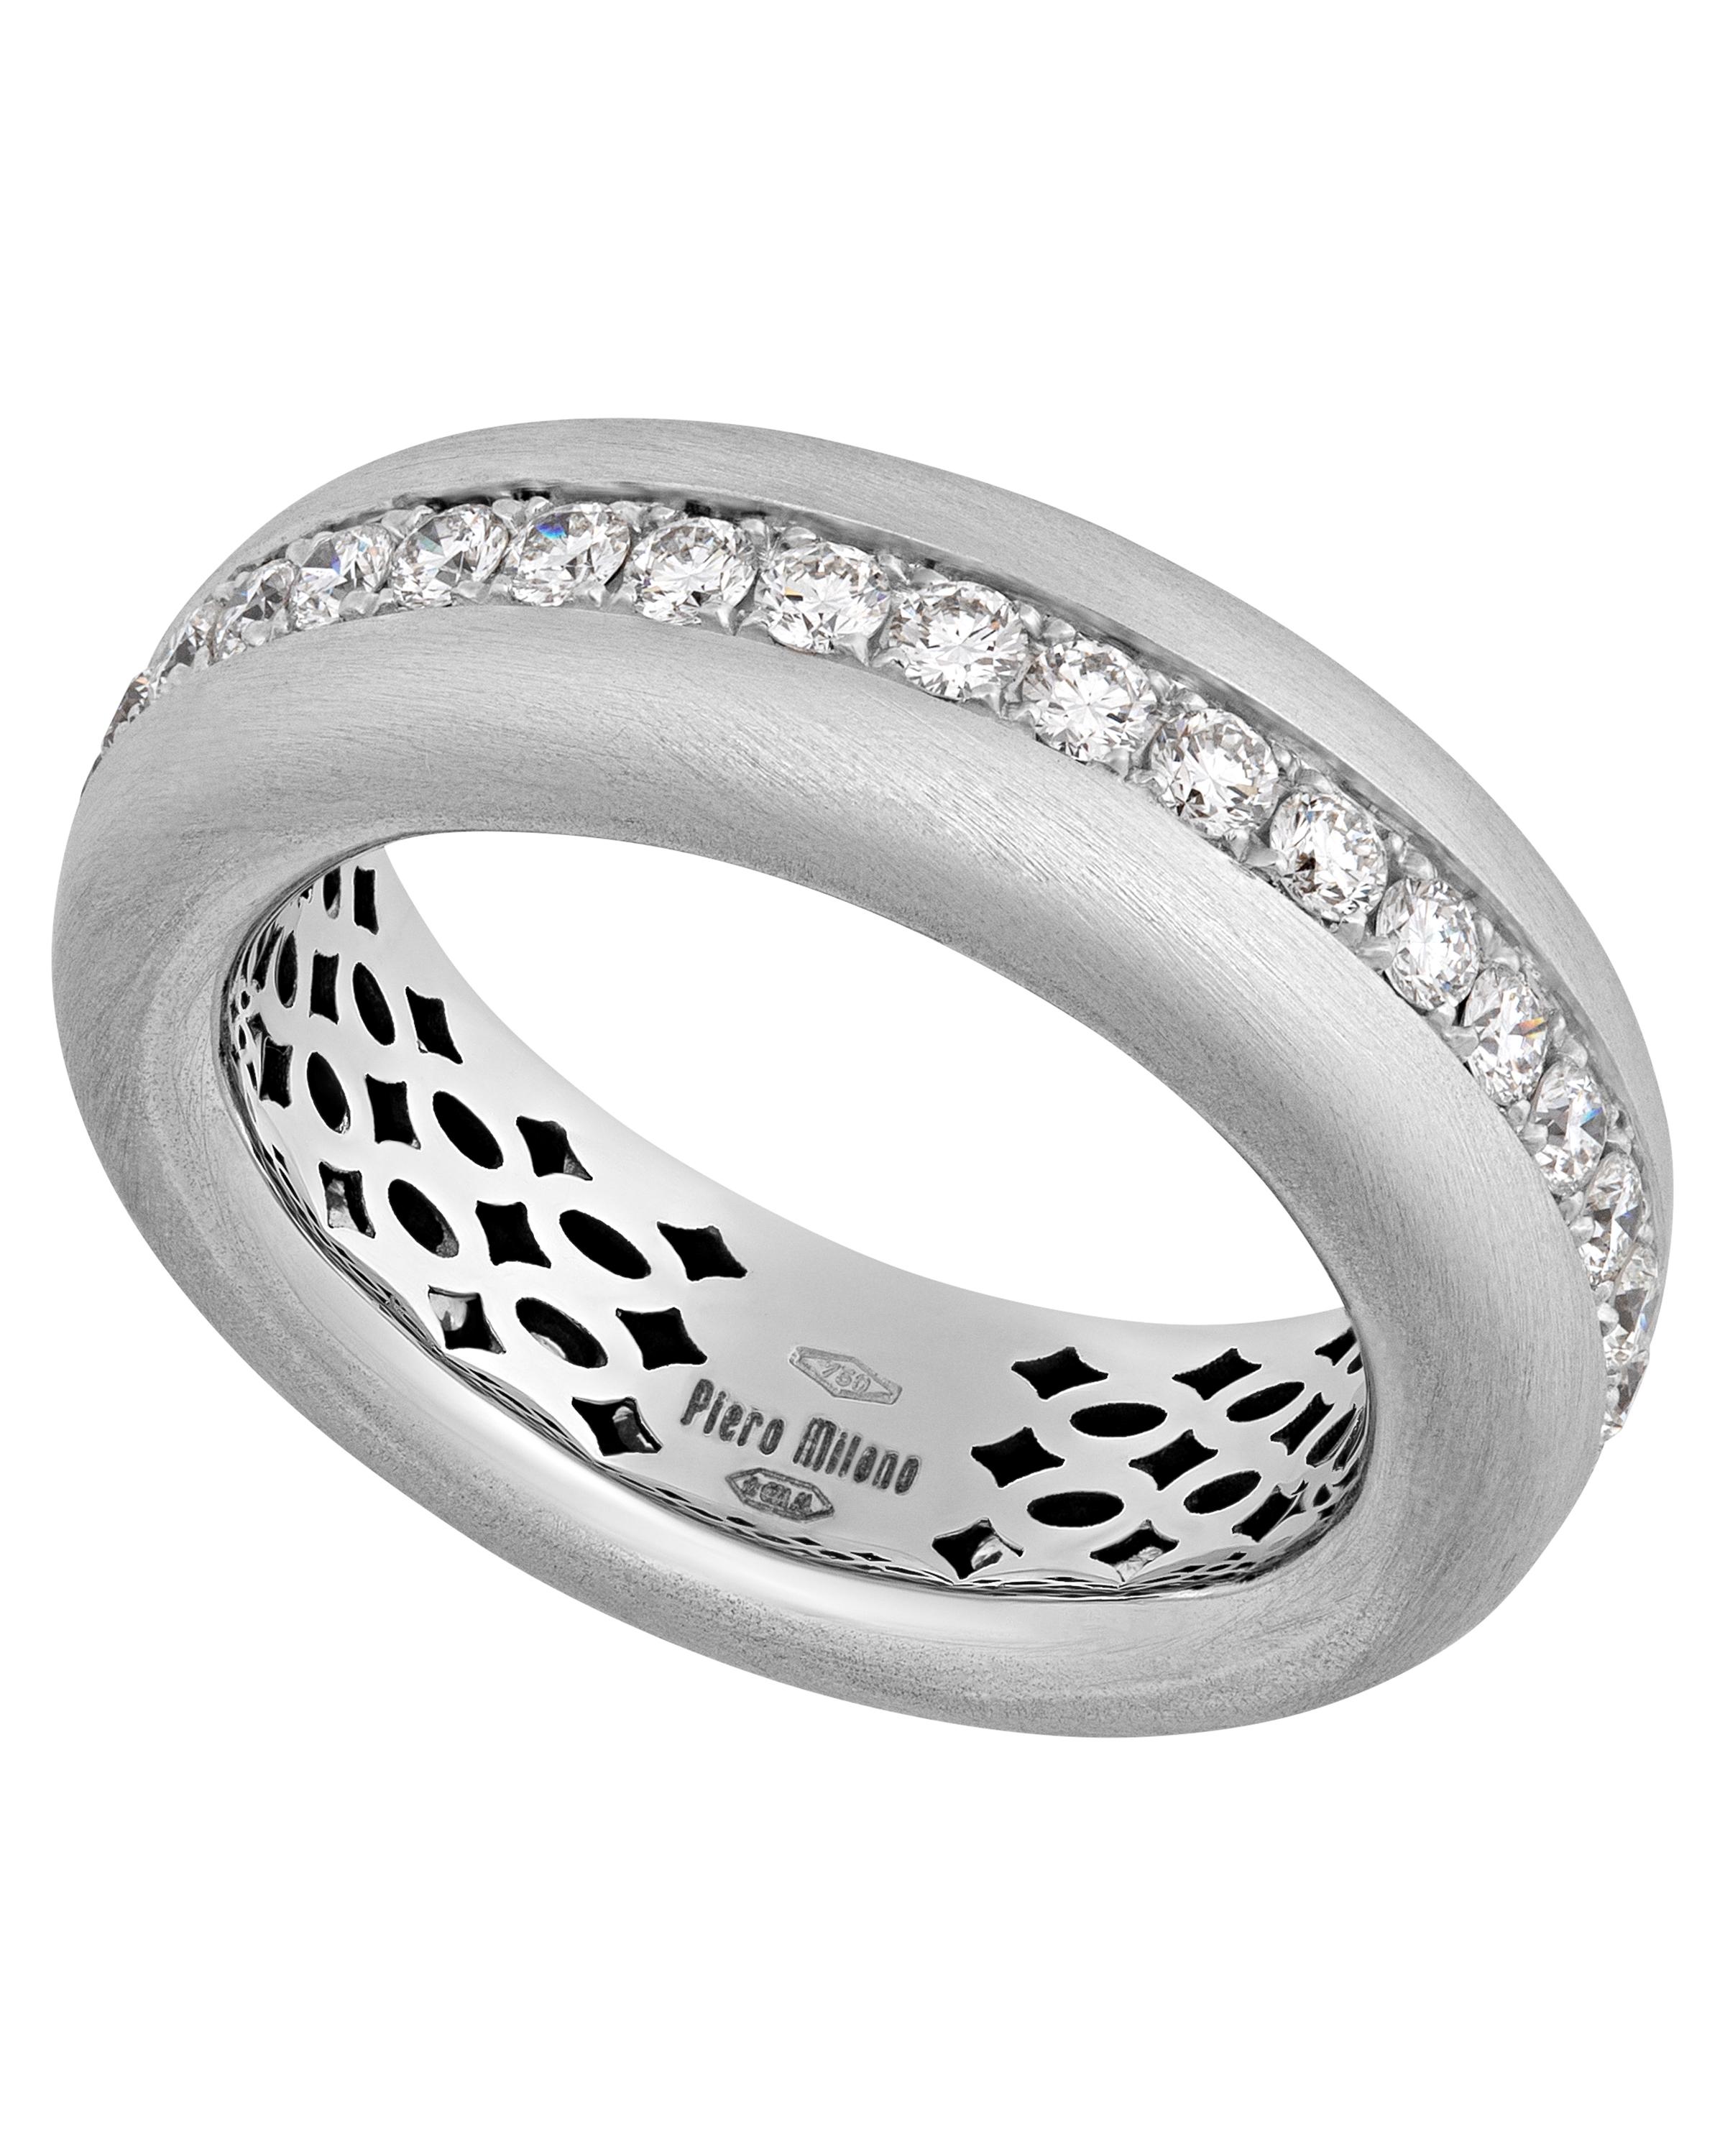 Contemporary Piero Milano 18K White Gold Diamond Ring Sz 6.75 For Sale